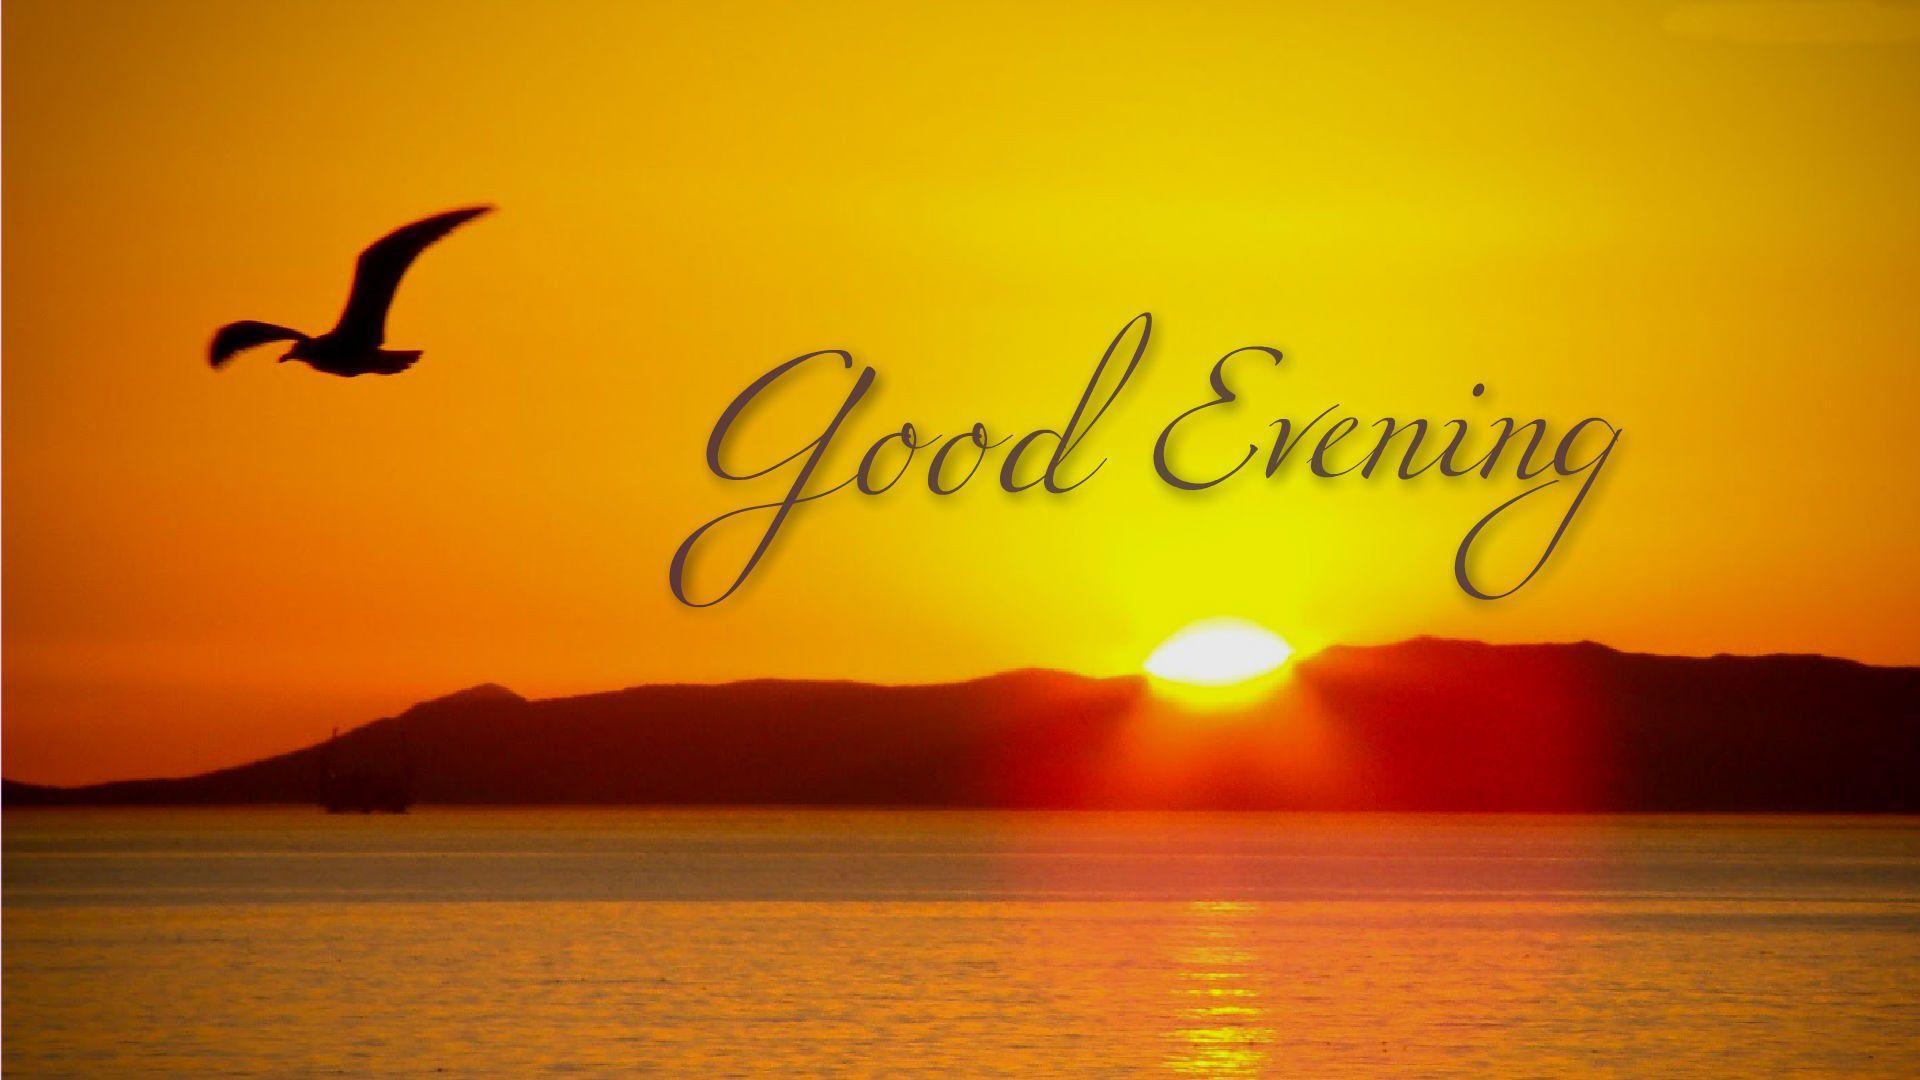 Best*} Good Evening Sms Shayari Quotes In Hindi